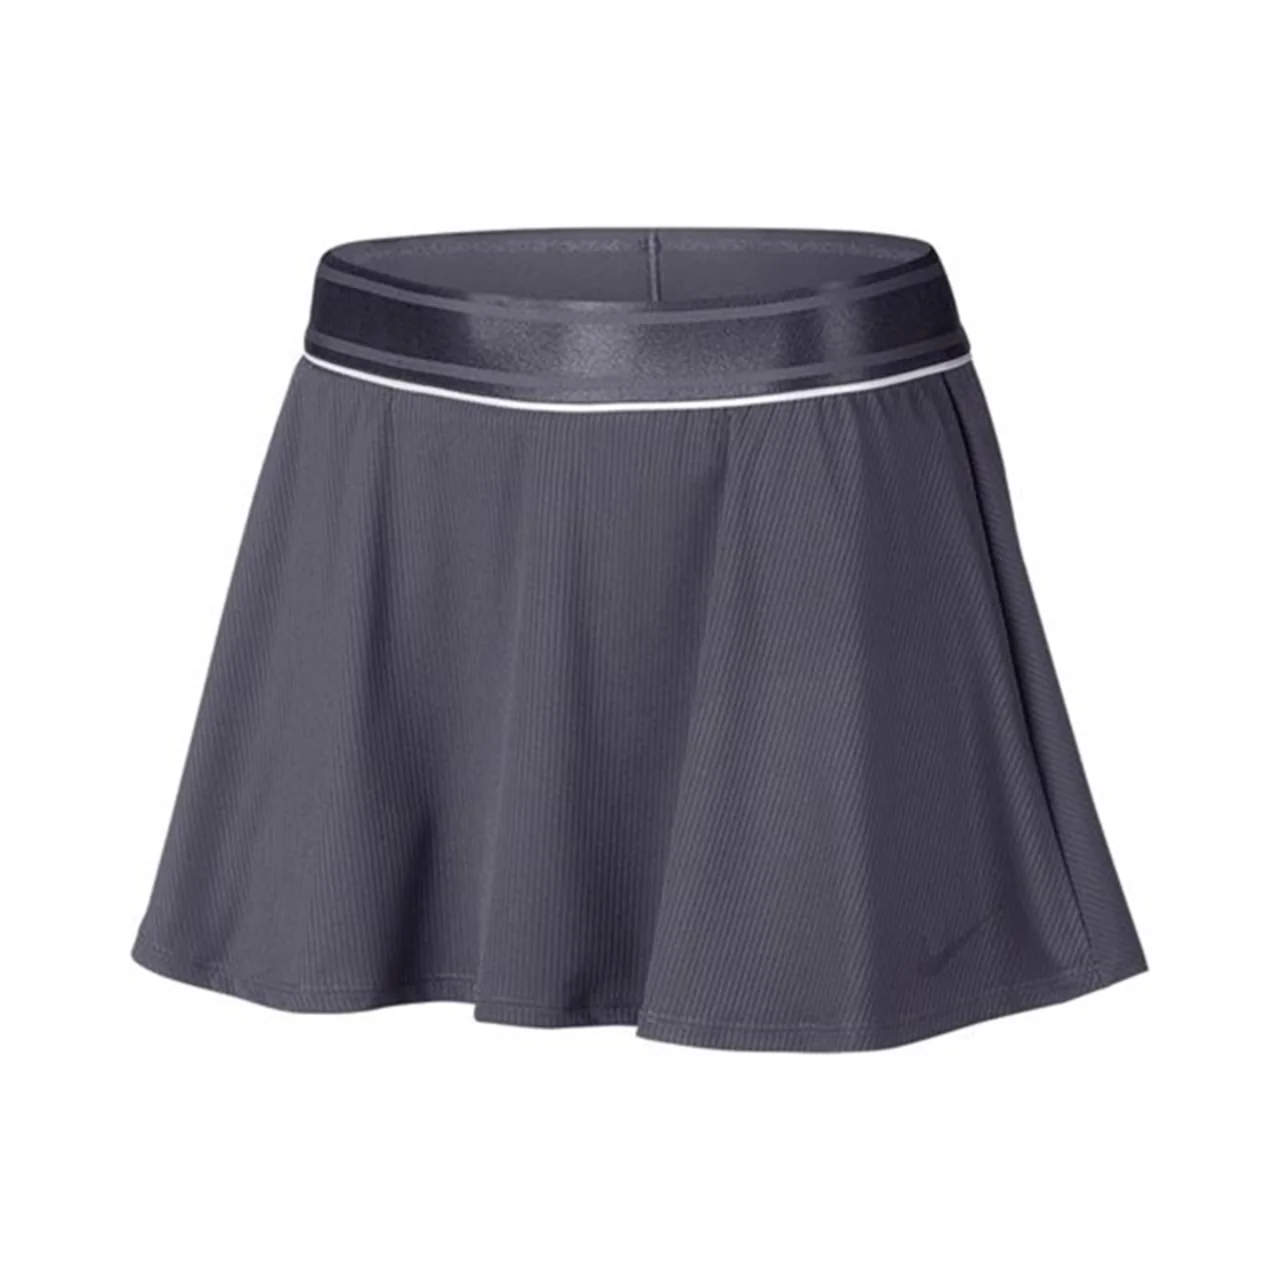 Nike Flouncy Skirt Gridiron